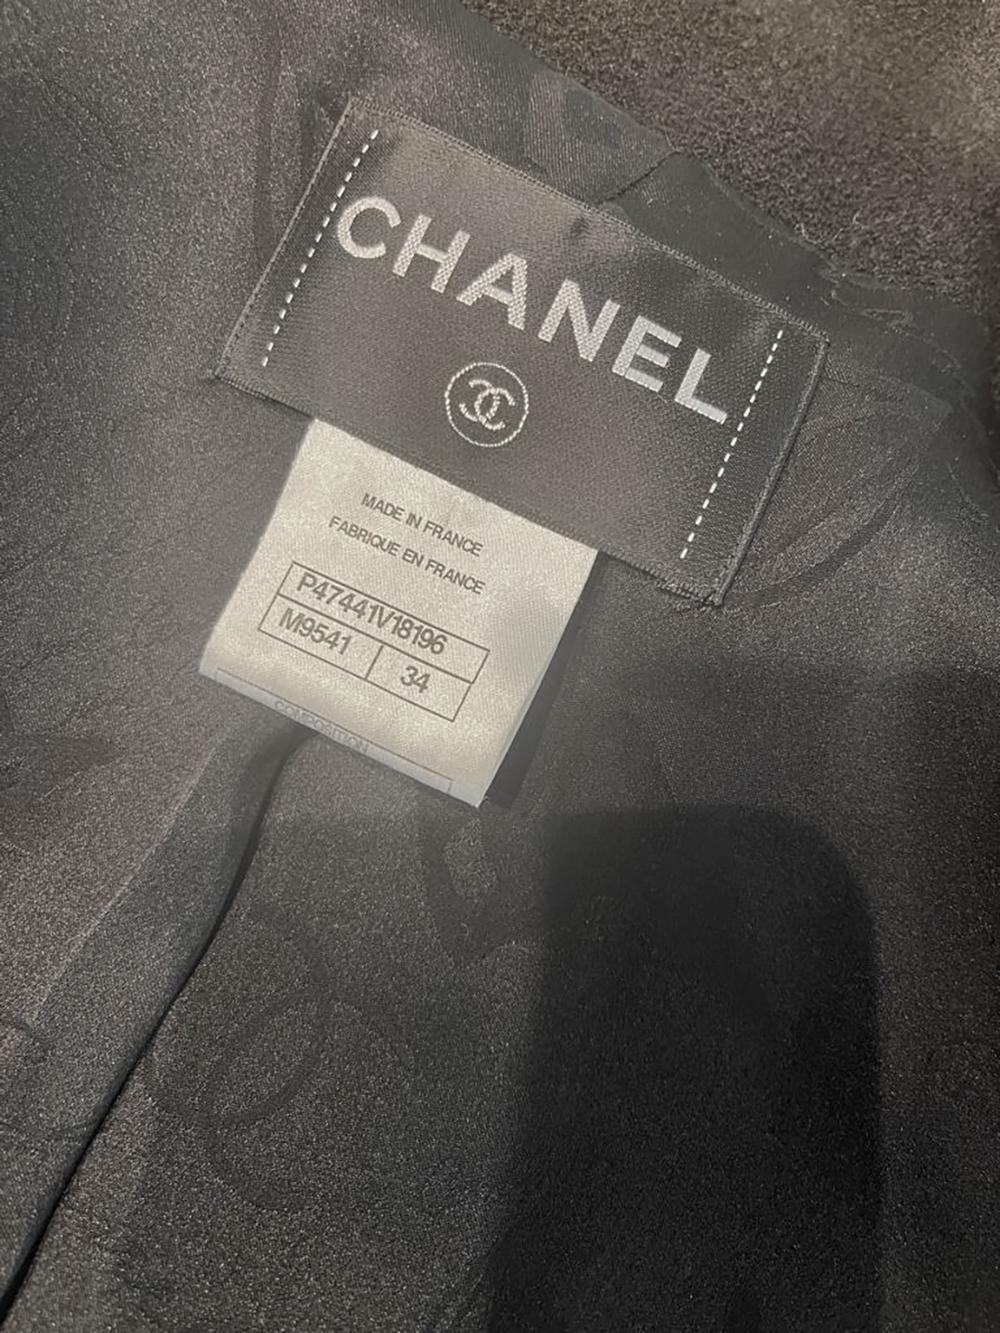 Chanel CC Buttons Paris / Singapore Runway Black Tweed Coat 8